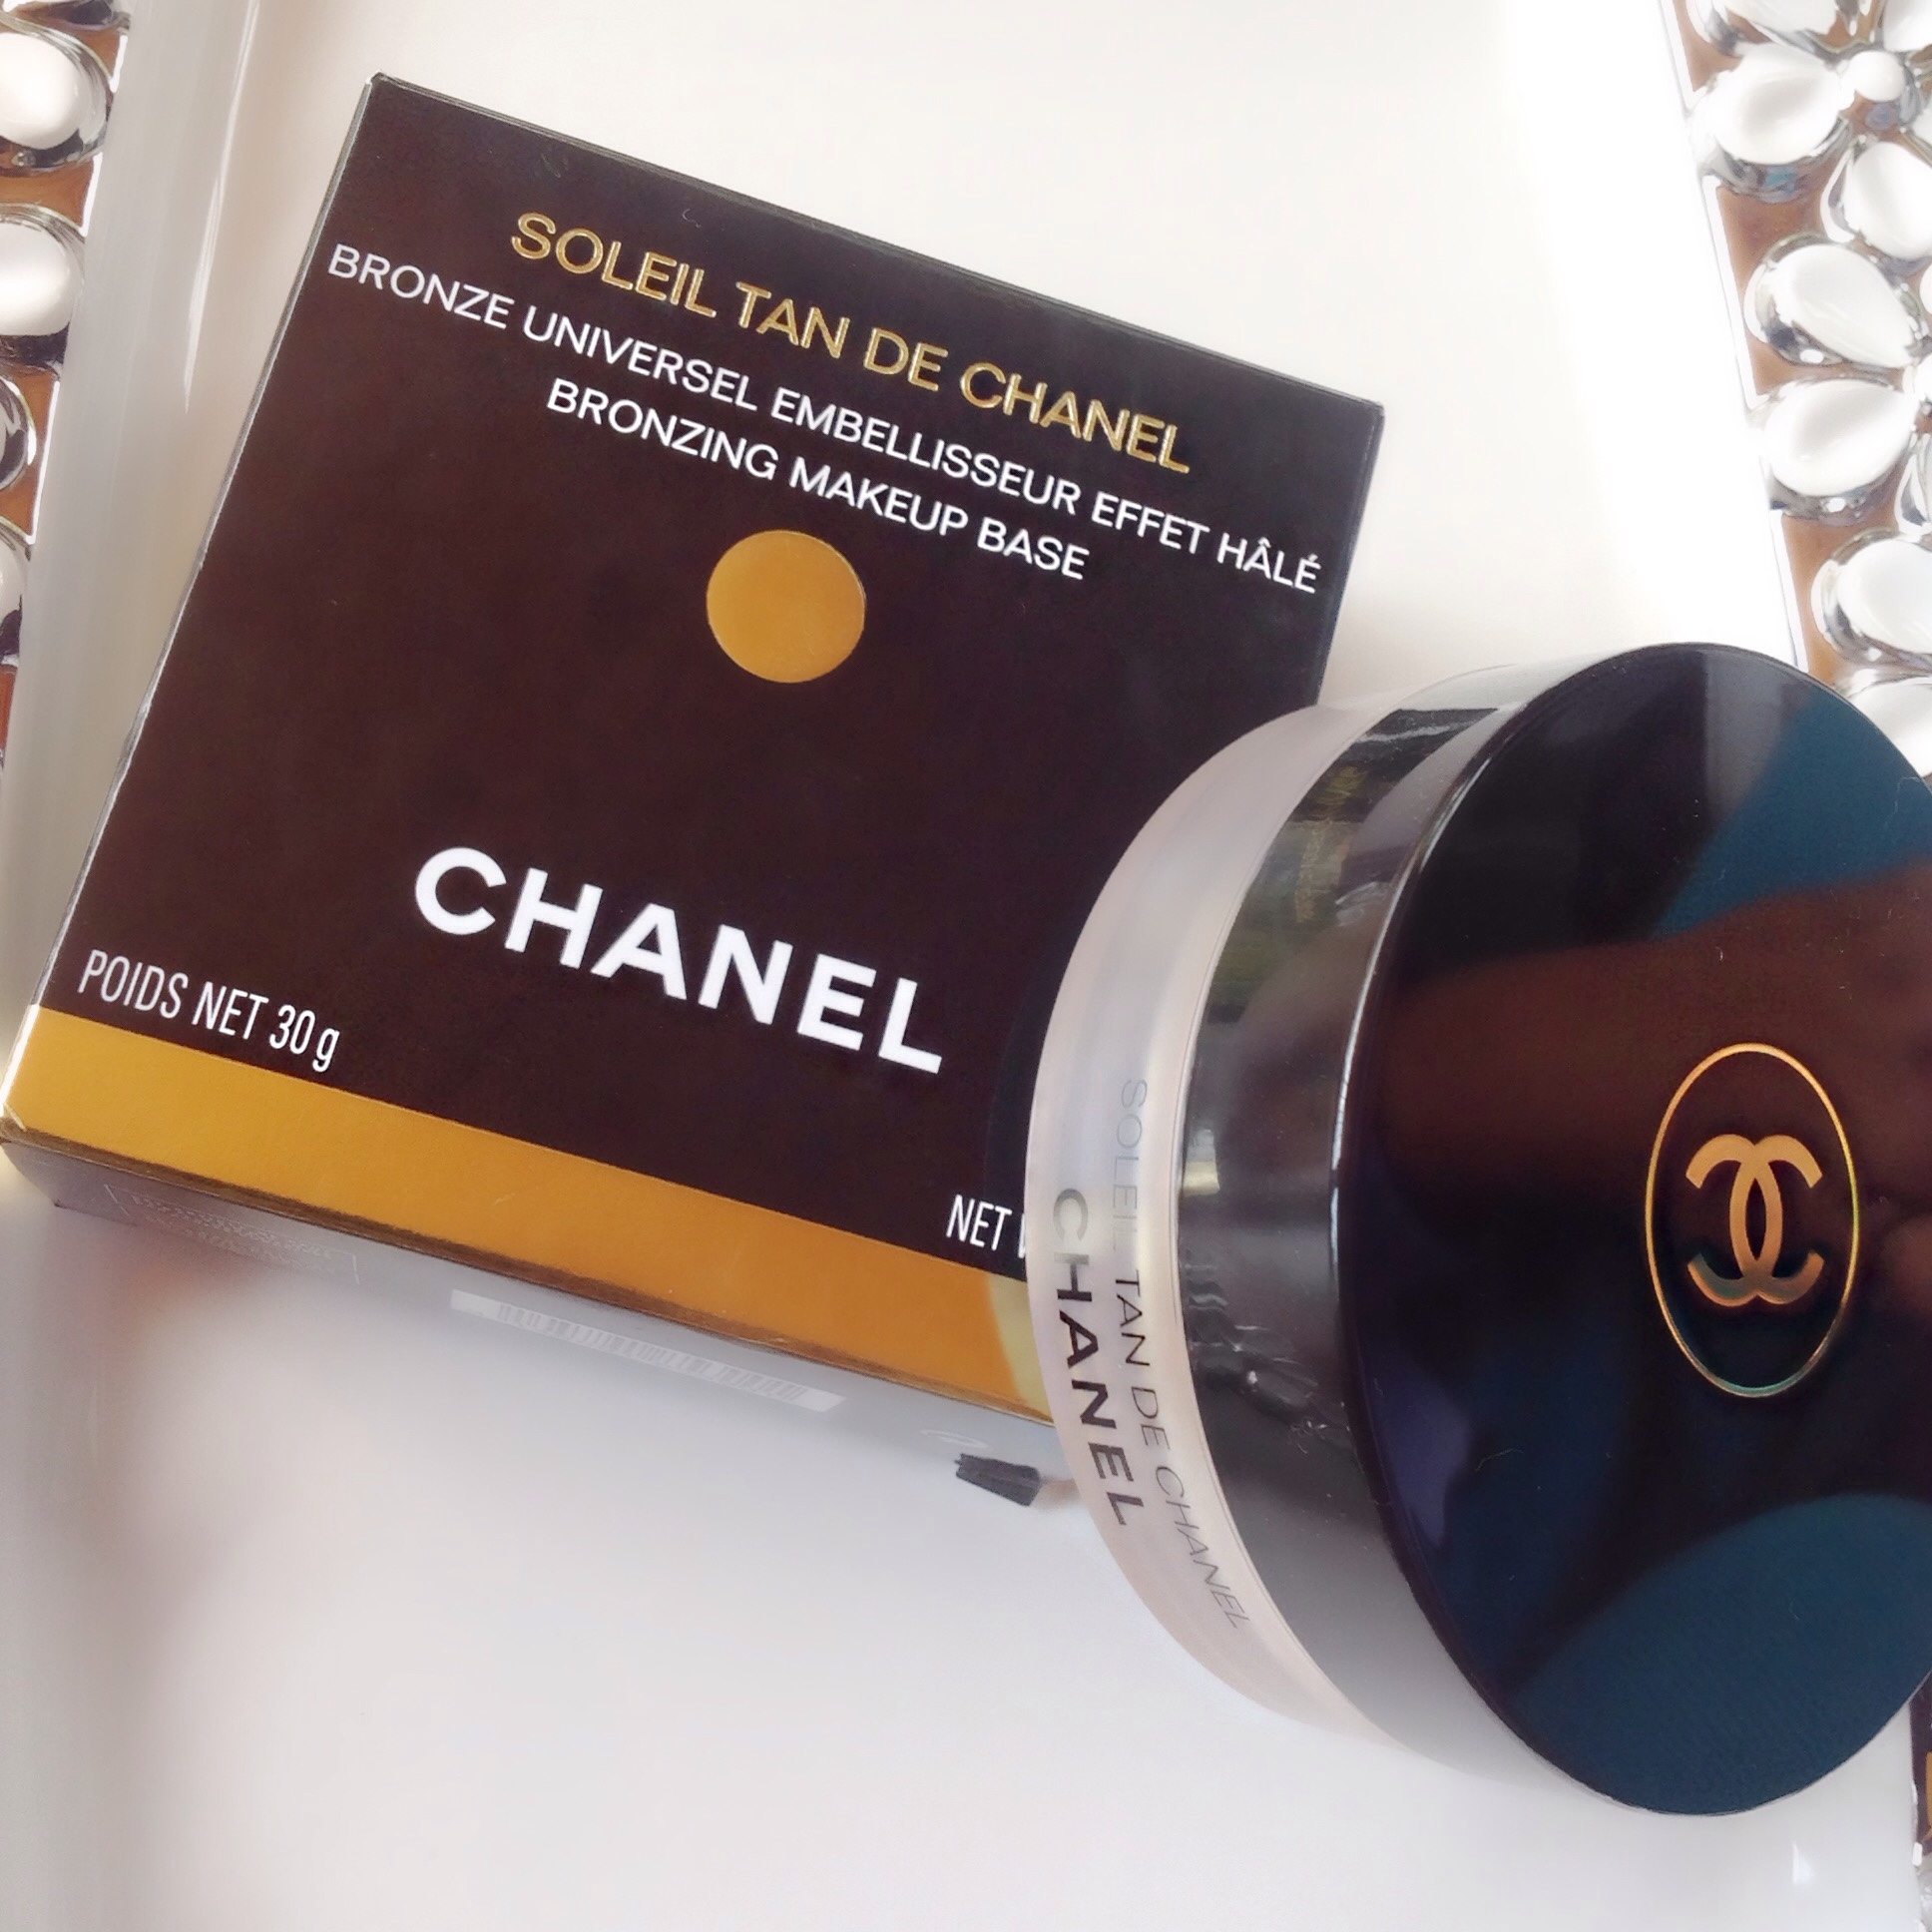 CHANEL: Soleil Tan de CHANEL Bronzing Makeup Base (swatches